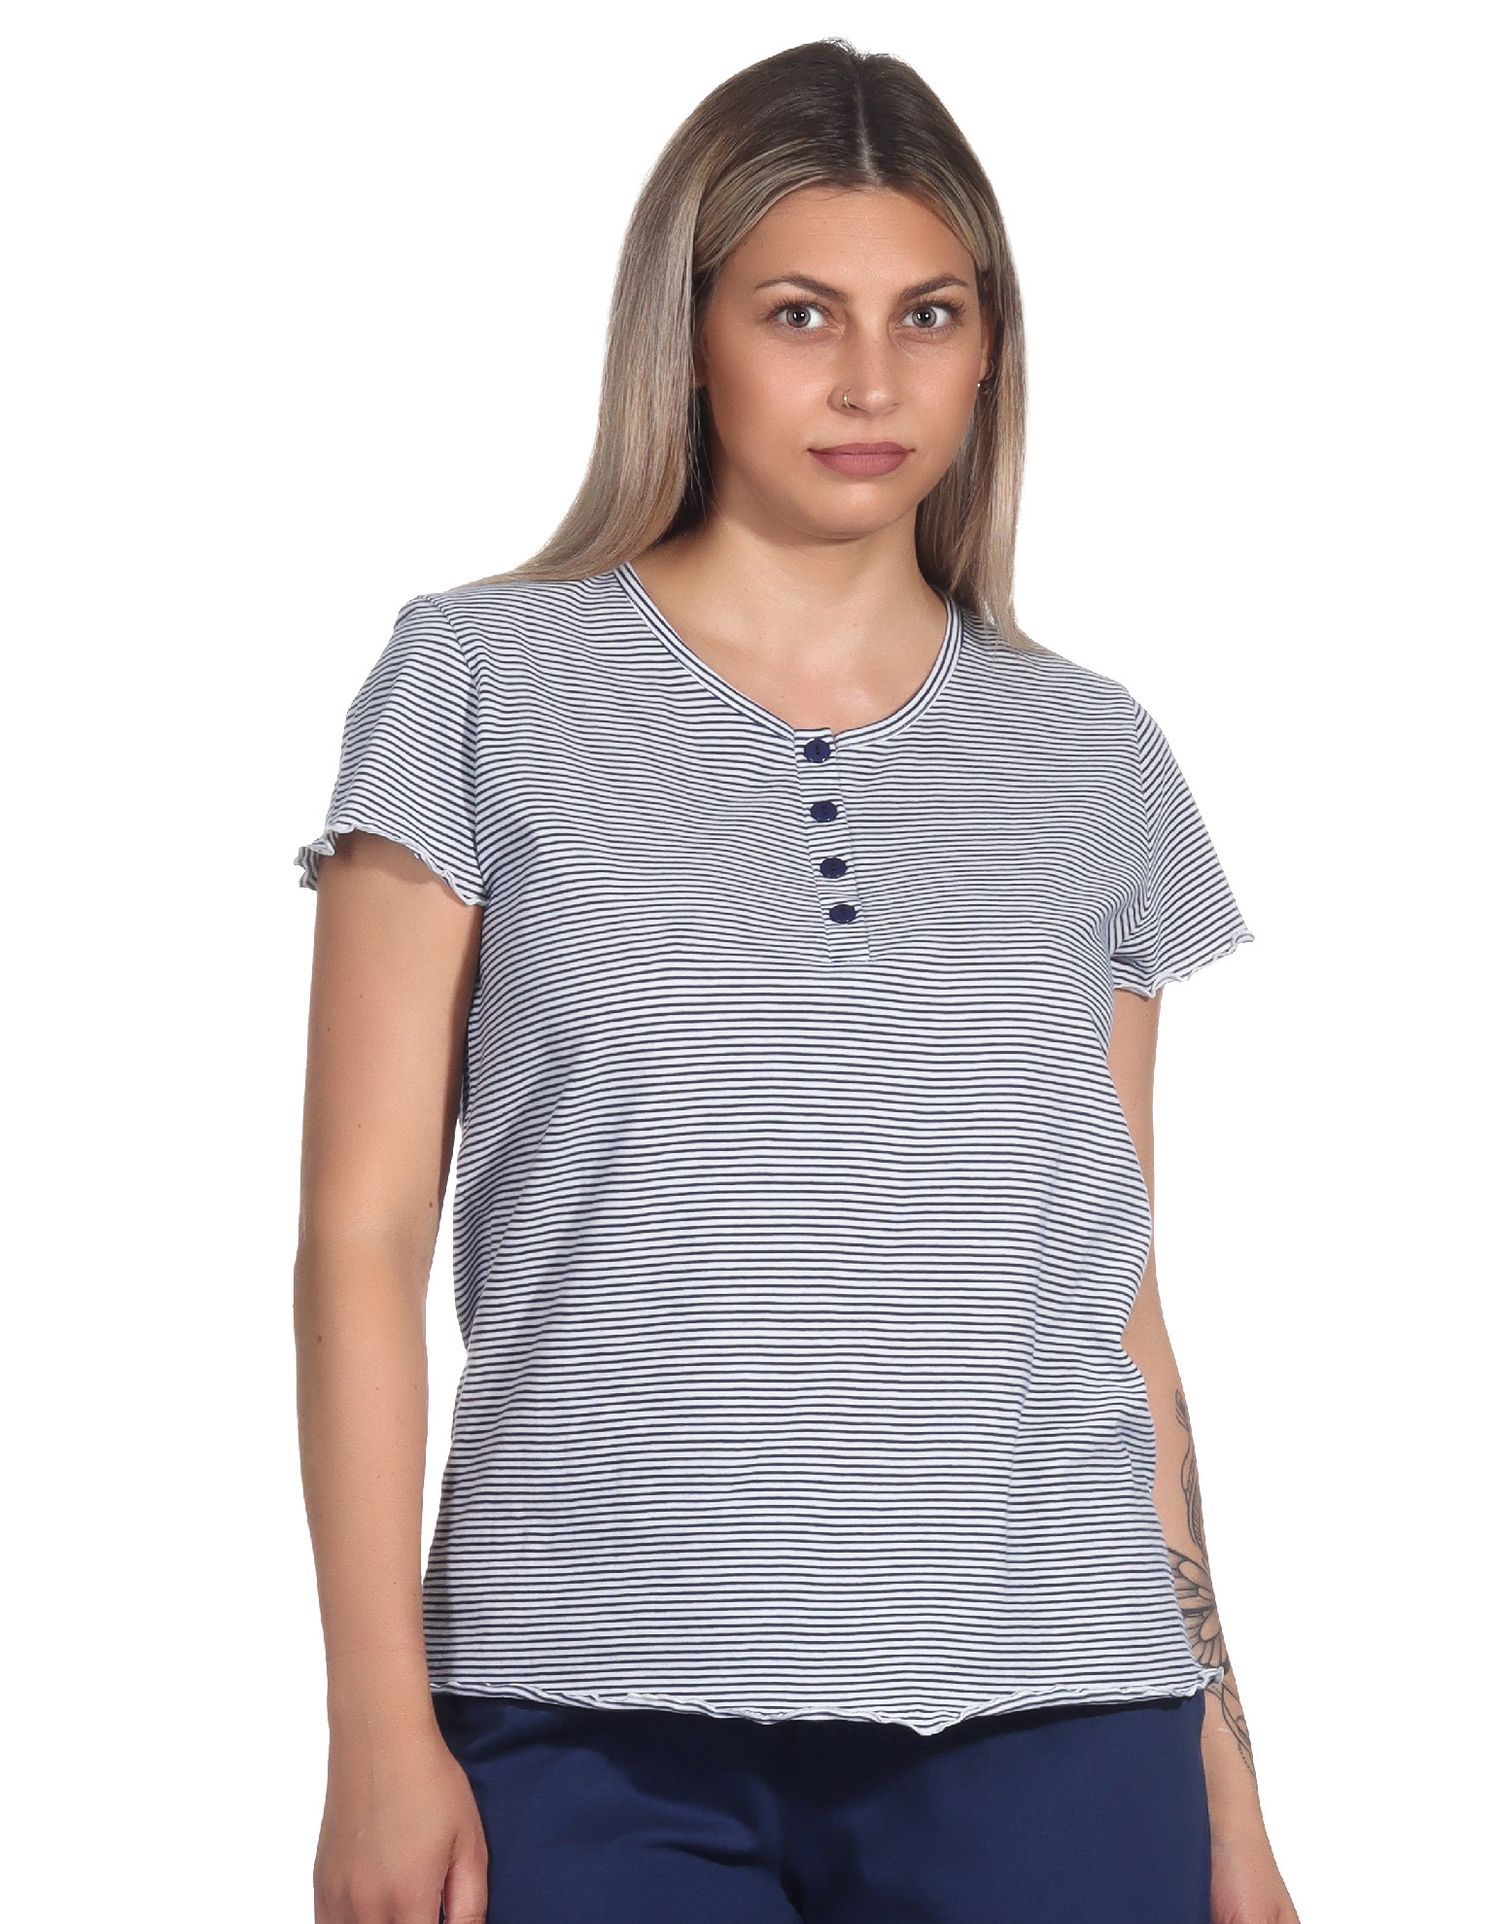 Damen Schlafanzug Shirt kurzarm Pyjama Oberteil Mix & Match in Streifenoptik